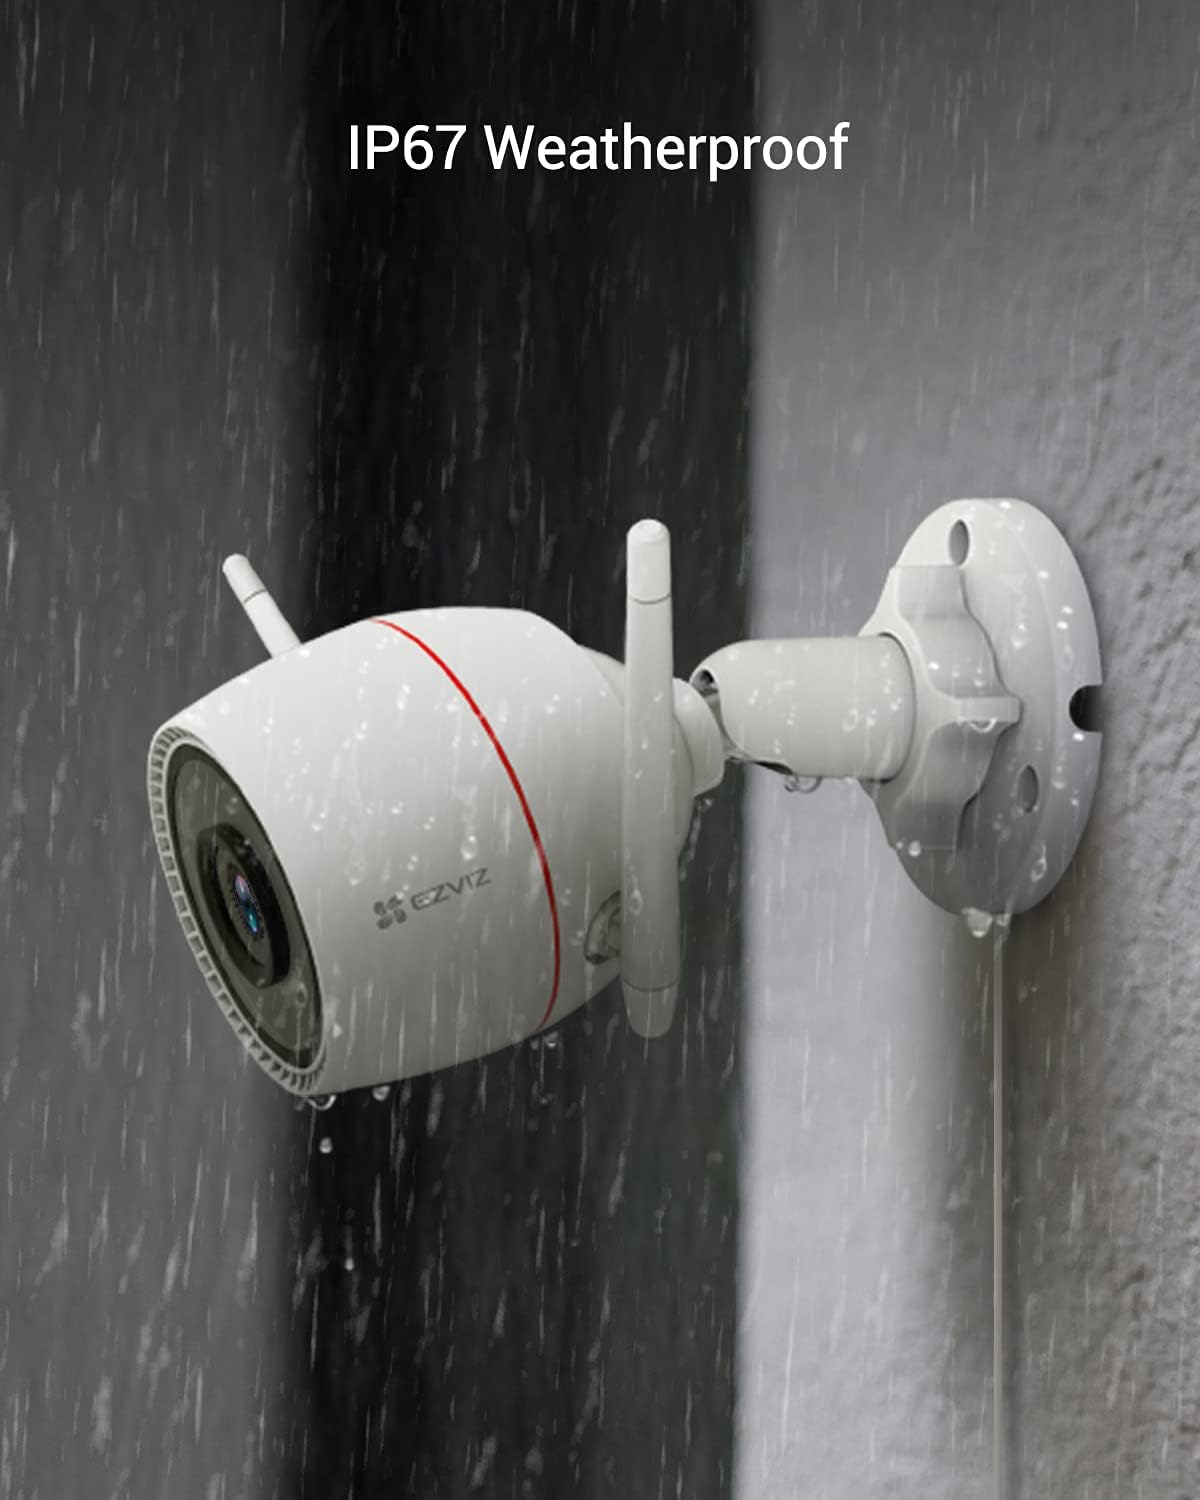 EZVIZ Security Camera Outdoor - $30